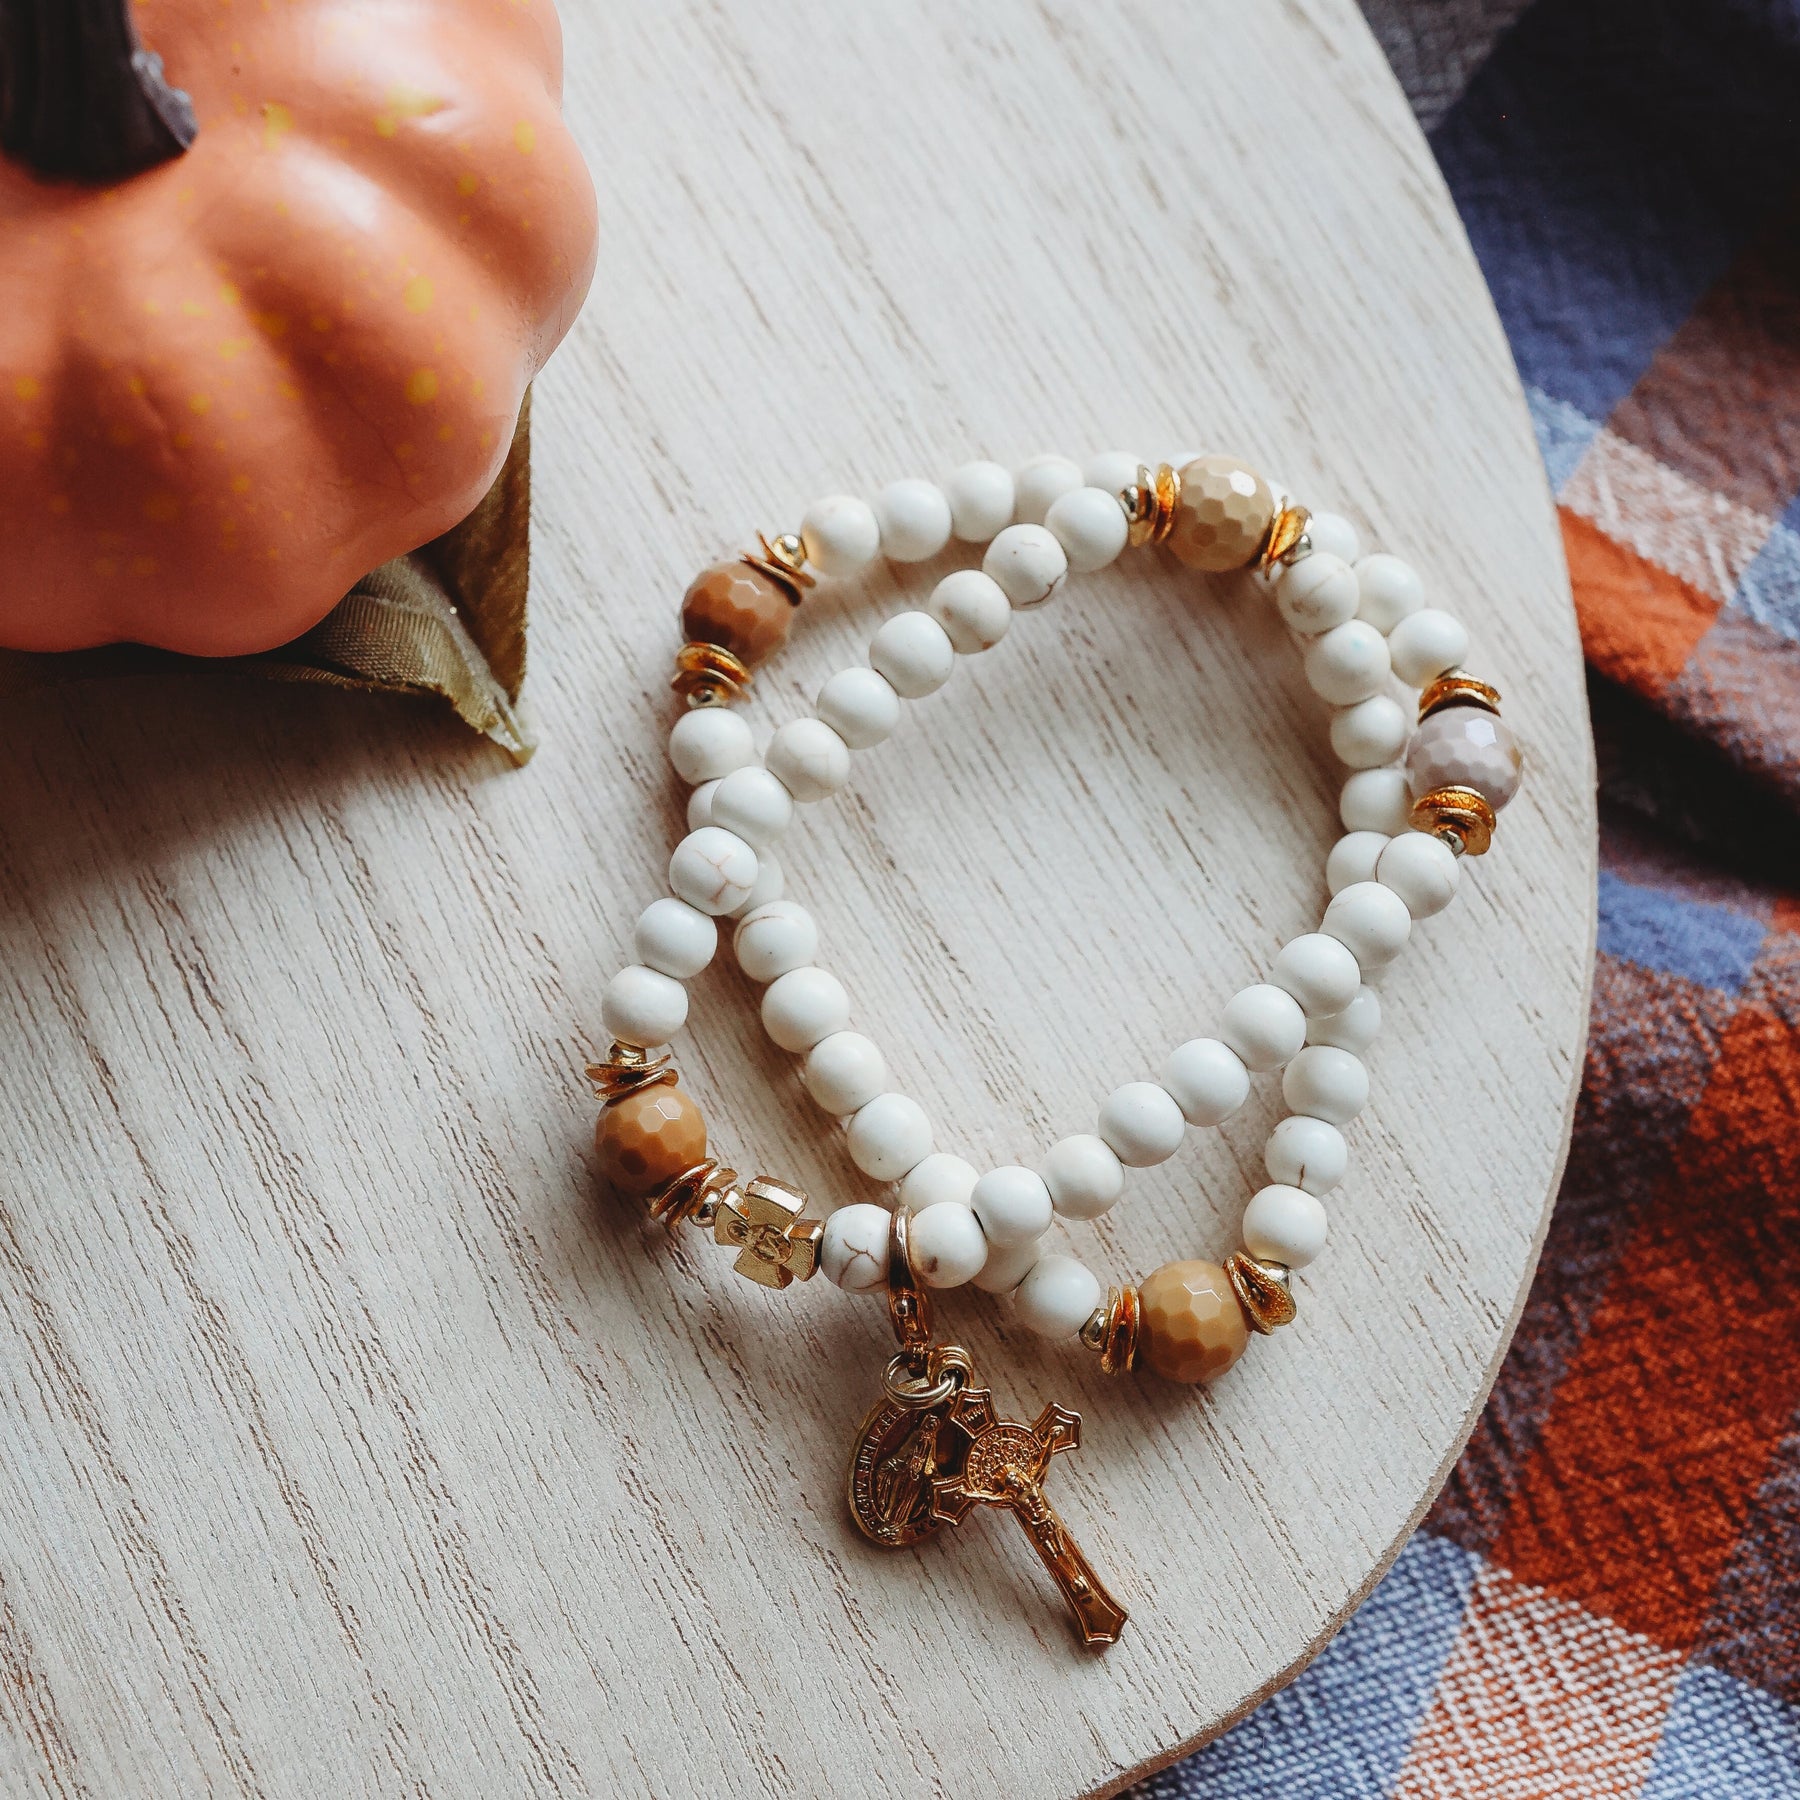 St Kateri Tekakwitha | Stretch & Wrap Rosary Bracelet | Fall Exclusive